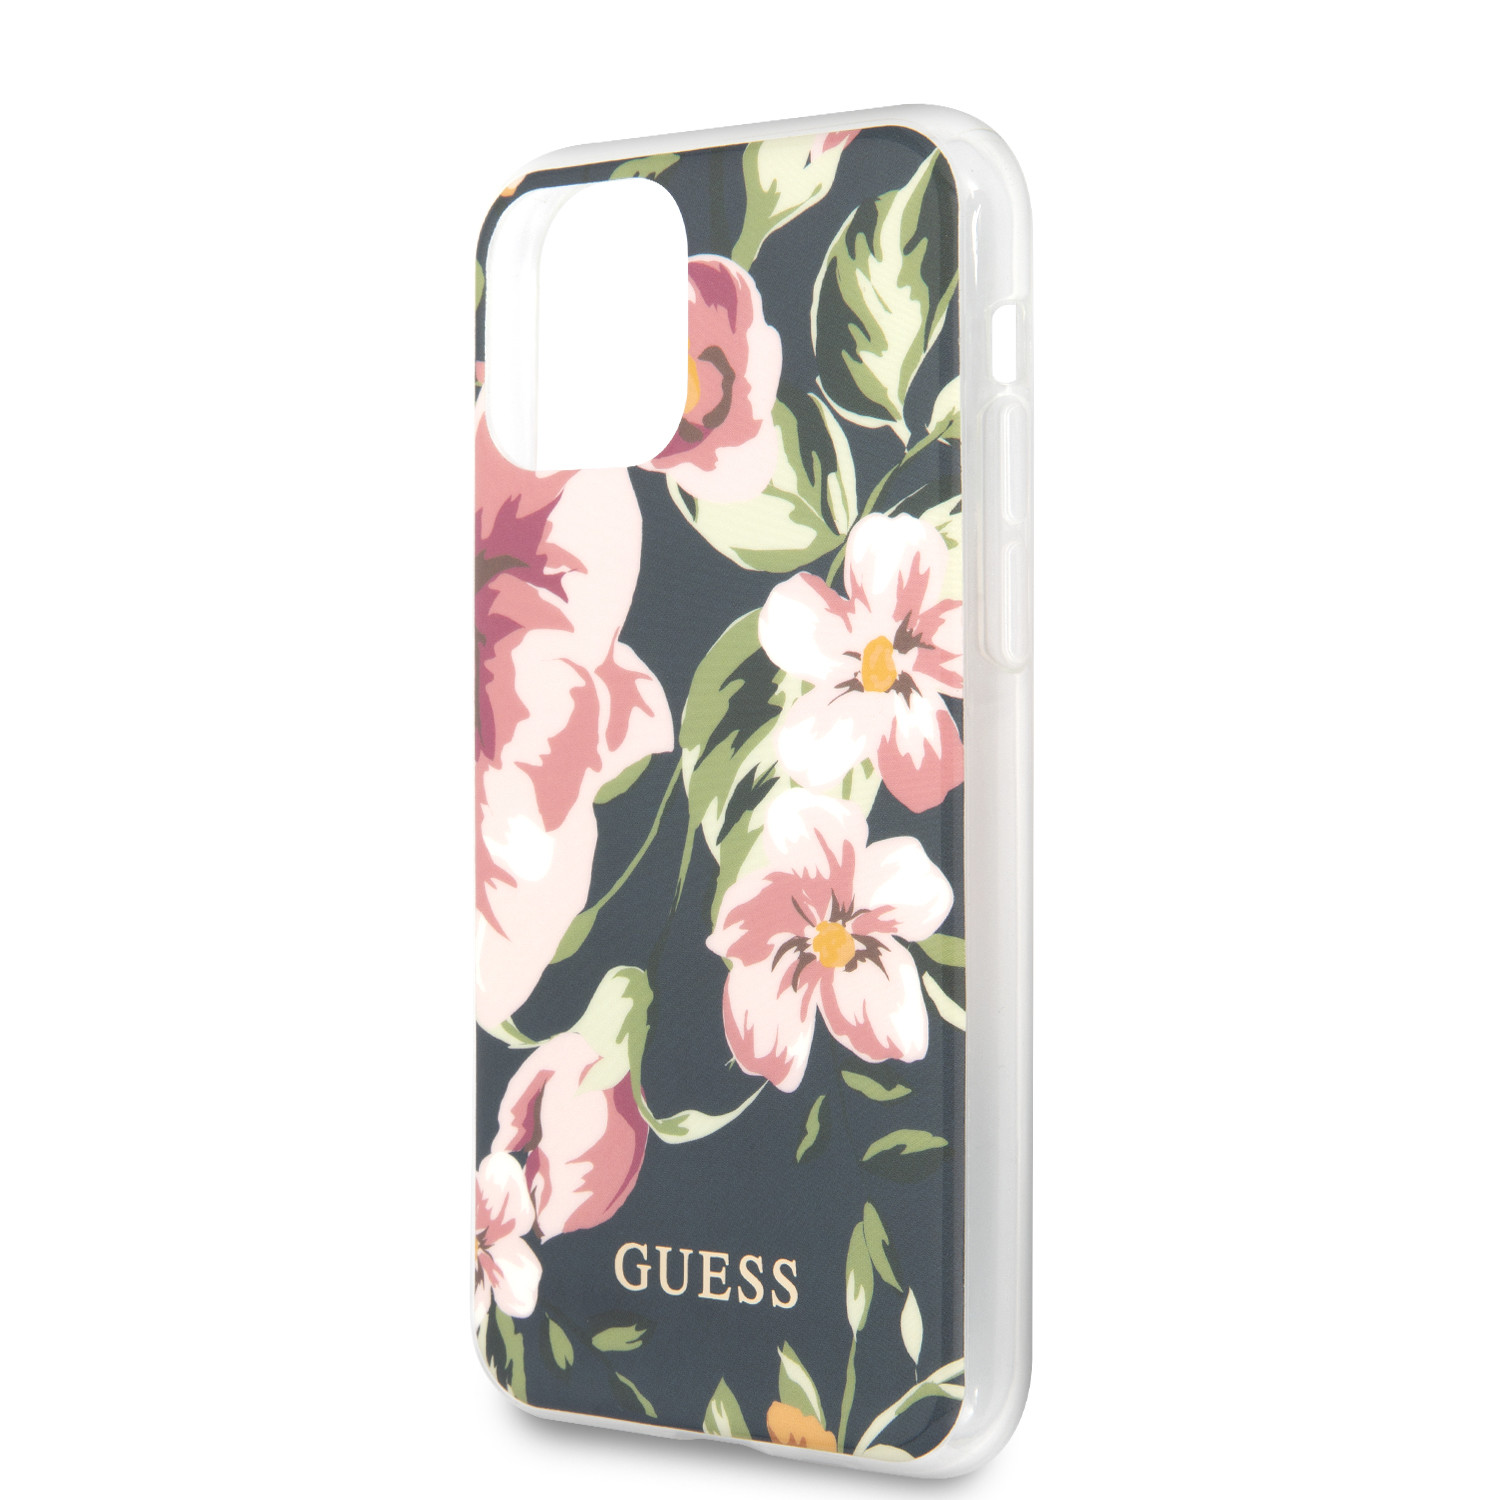 GUHCN65IMLFL03 Guess Flower Shiny N.3 Zadni Kryt pro iPhone 11 Pro Max Navy thumb